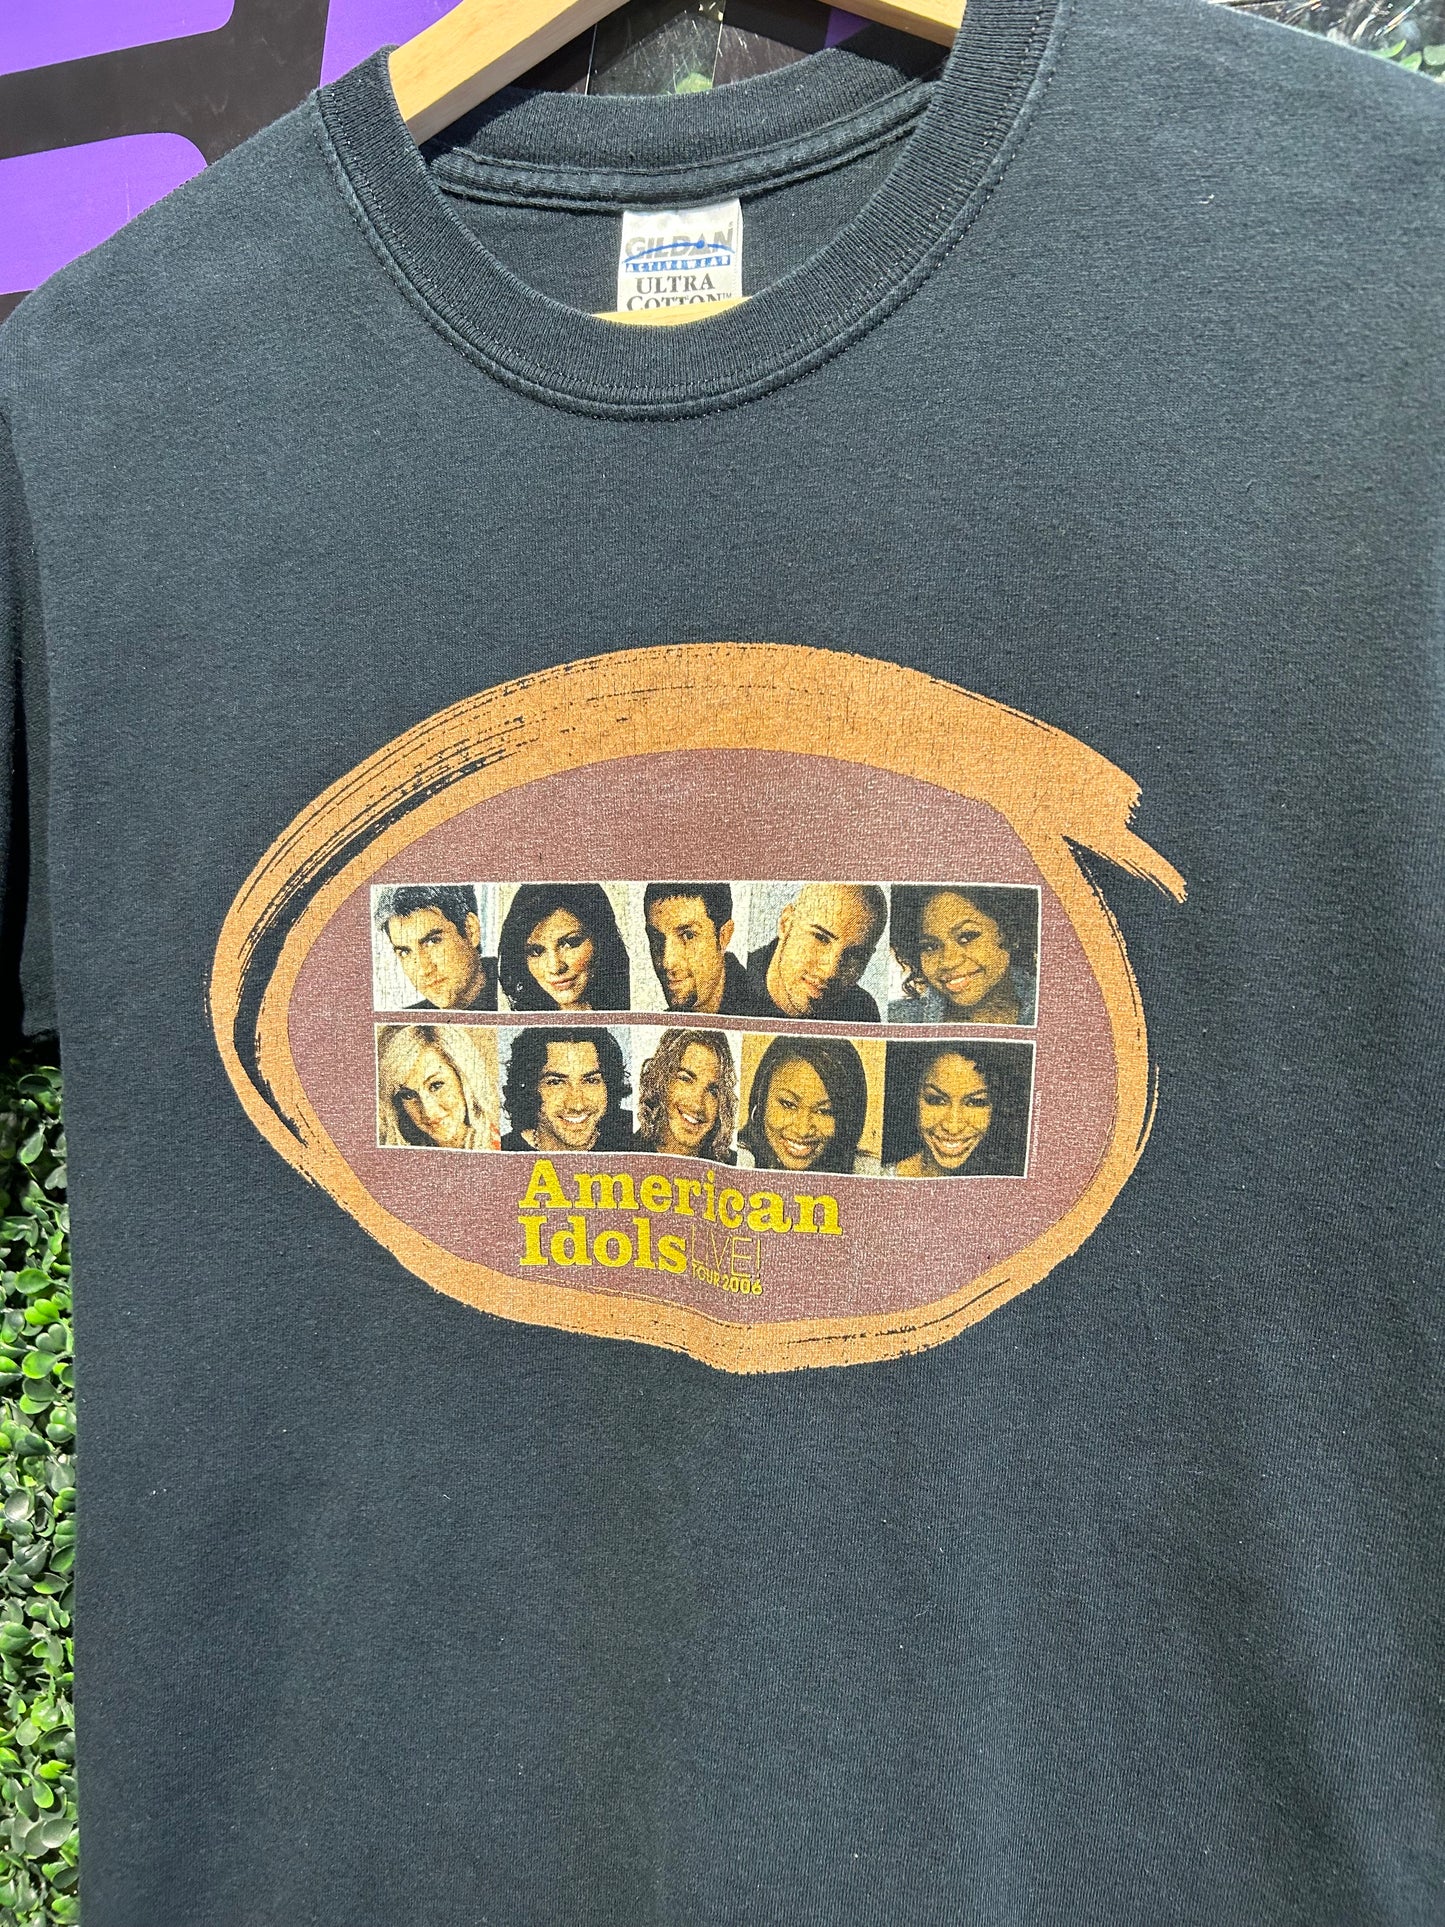 2006 American Idol Live Tour T-Shirt. Size Small